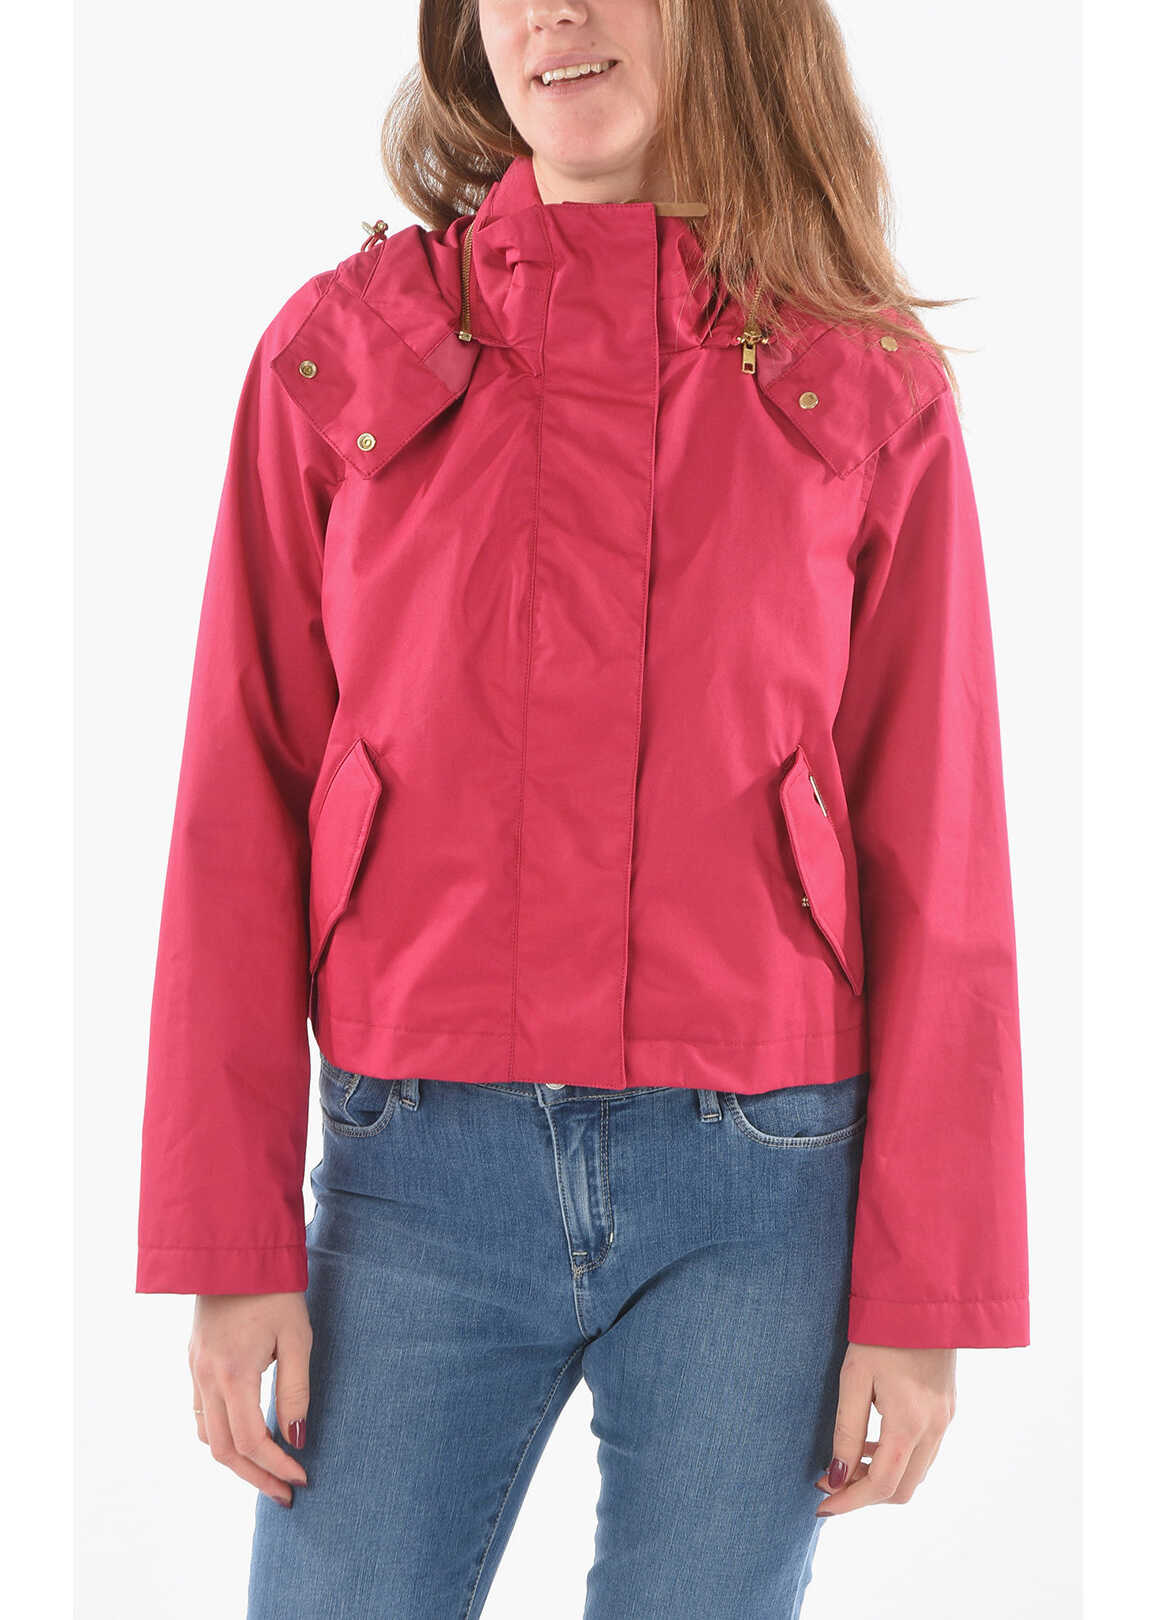 Woolrich Removable Hooded Walker Short Jacket With Golden Details Pink